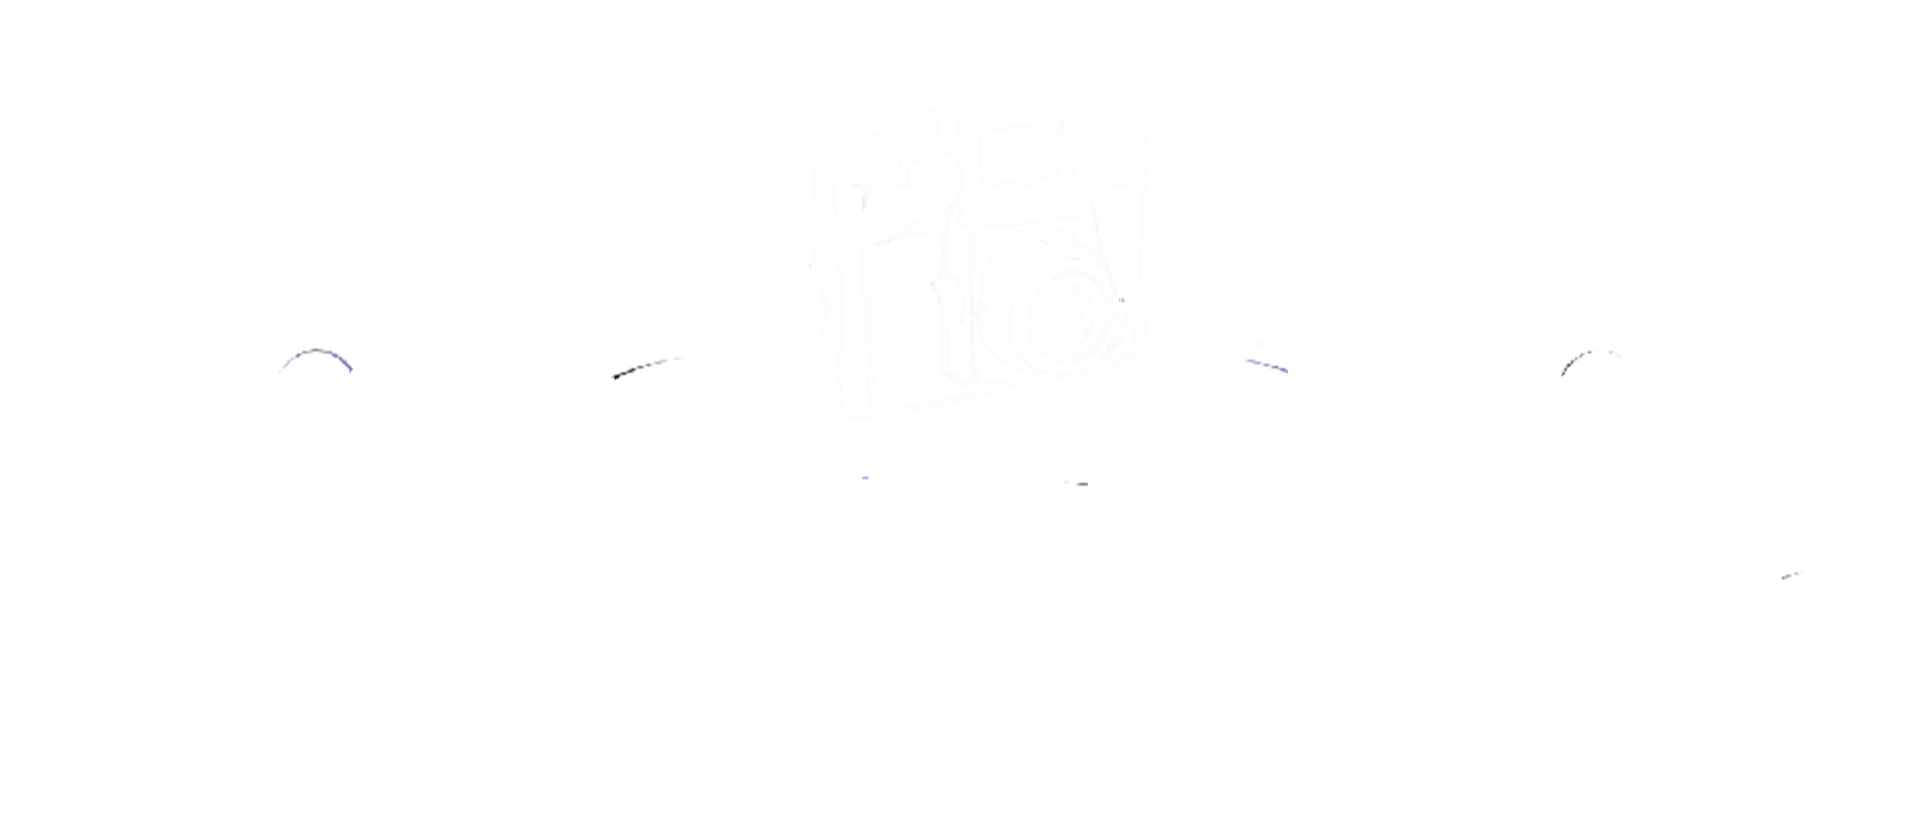 Caroline Nixon Photography Ltd logo